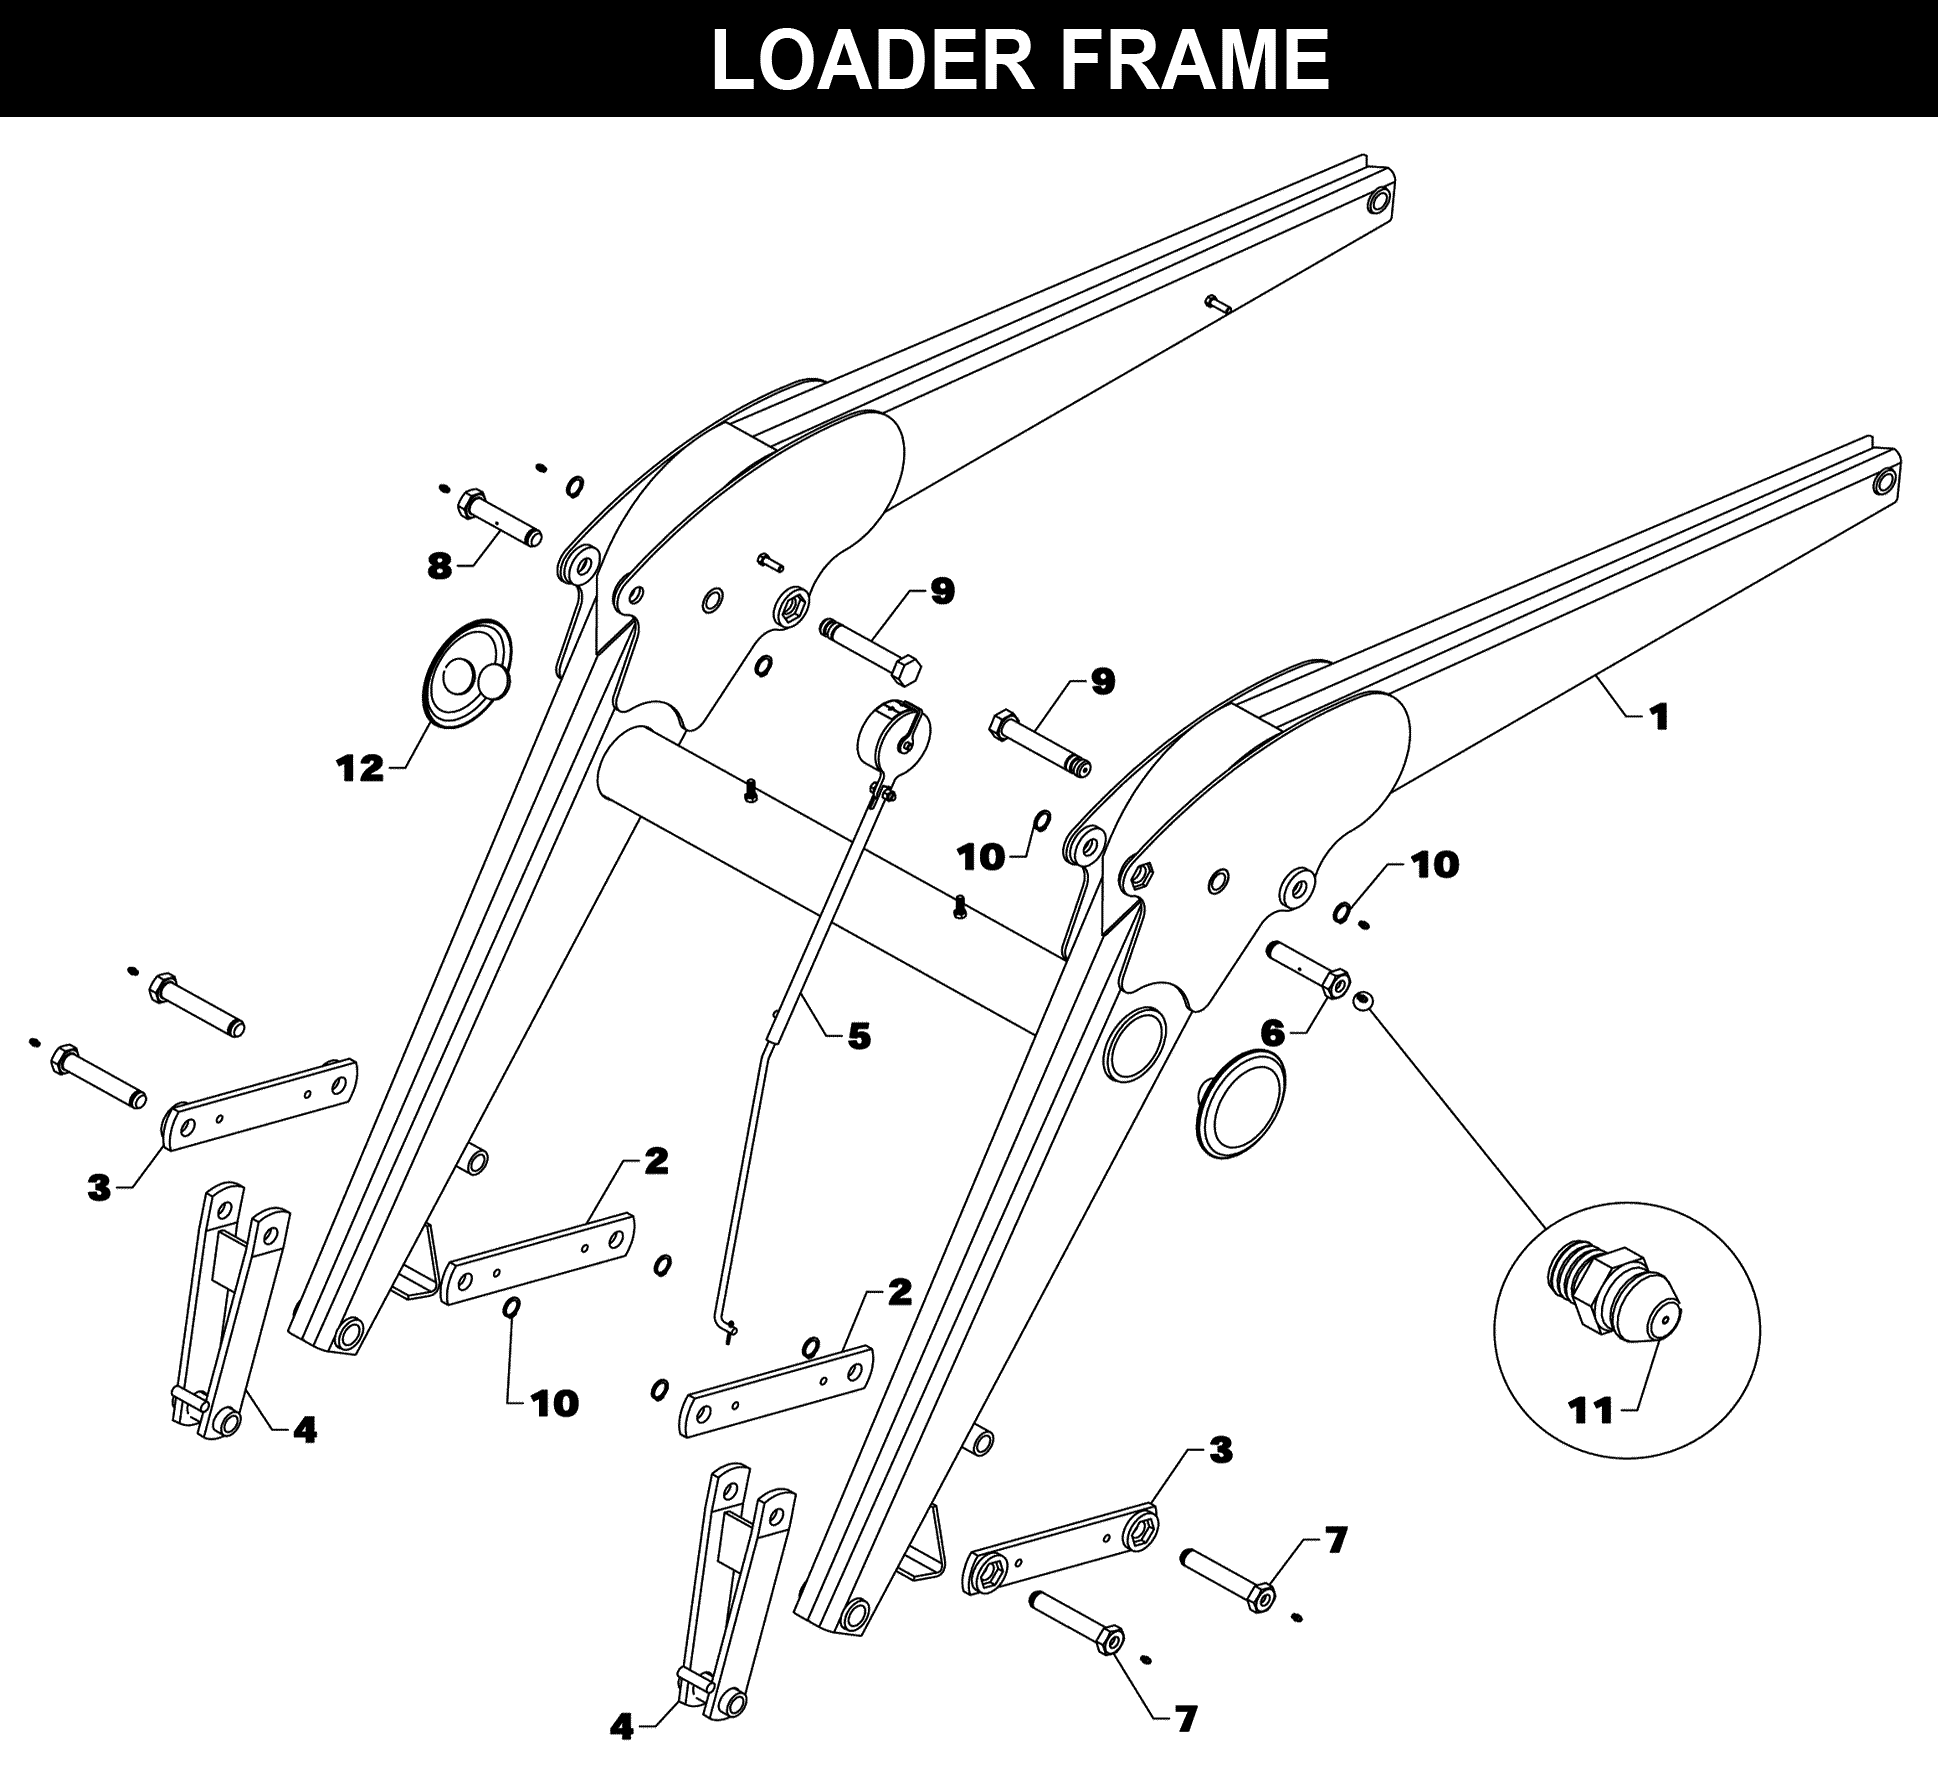 TA-26 Plus Loader Frame